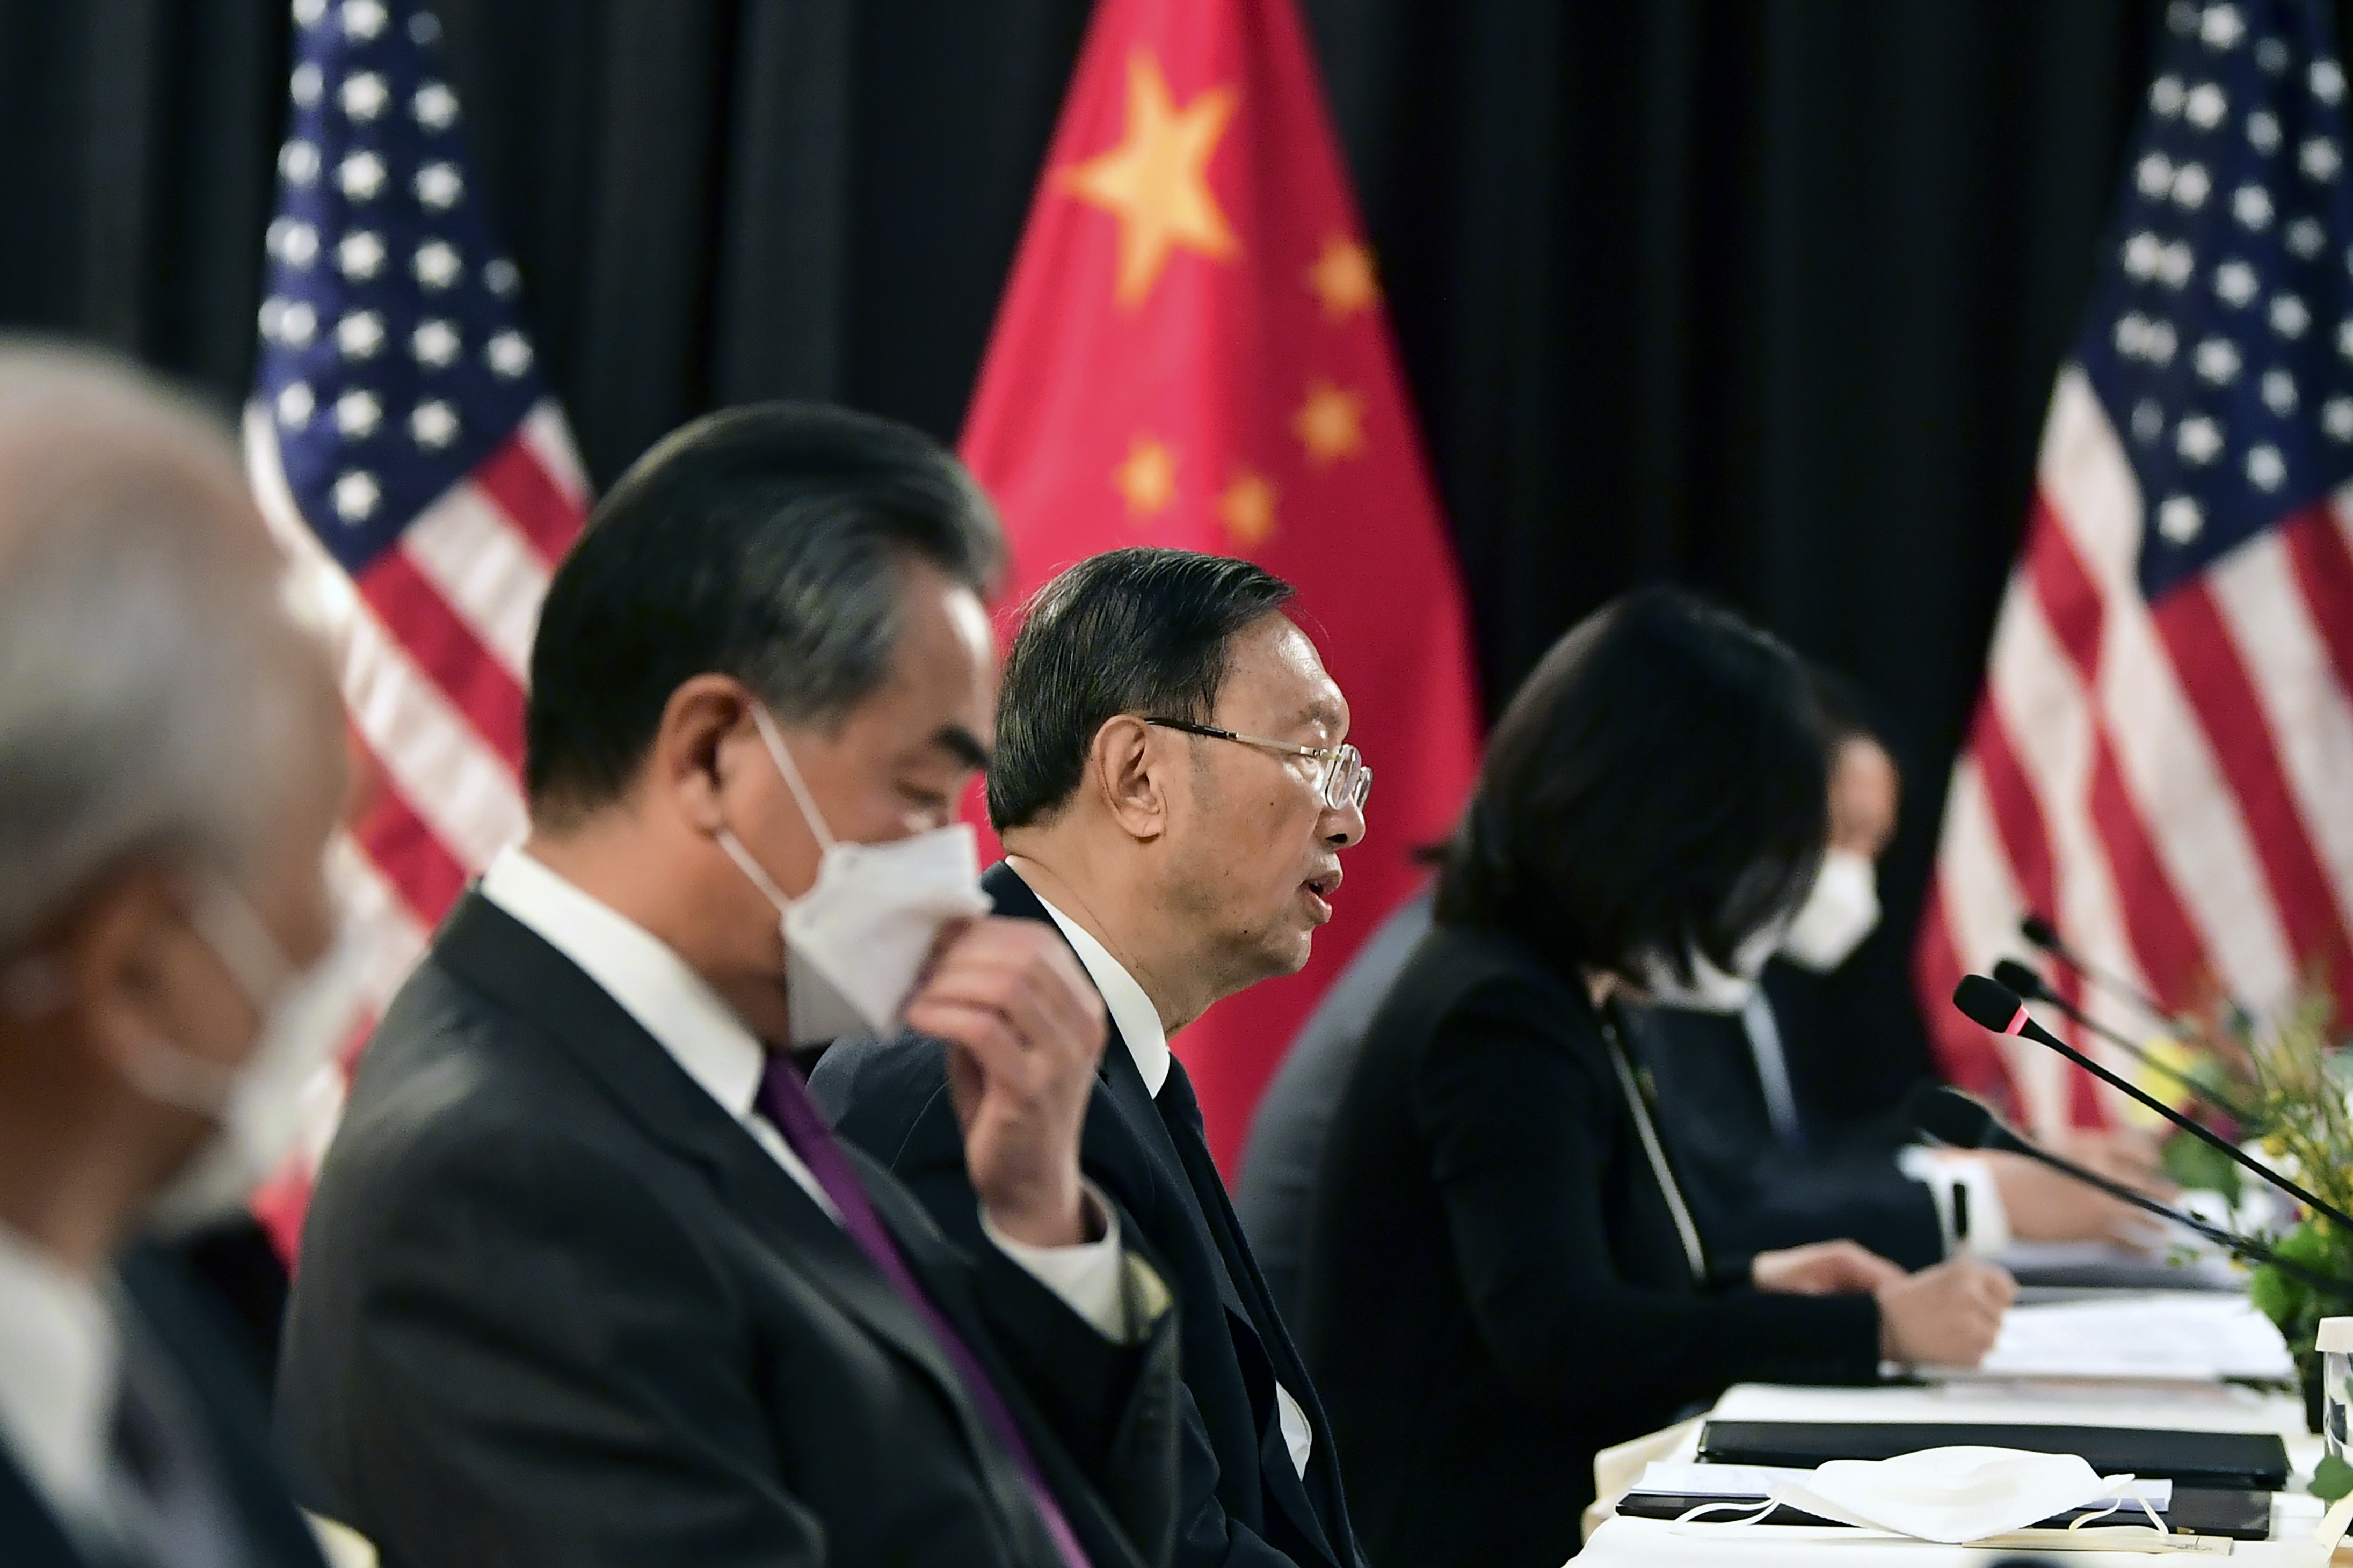 Переговоры японцев. Посол КНР В США Цинь Ган. Переговоры с китайцами. Переговоры в Китае.